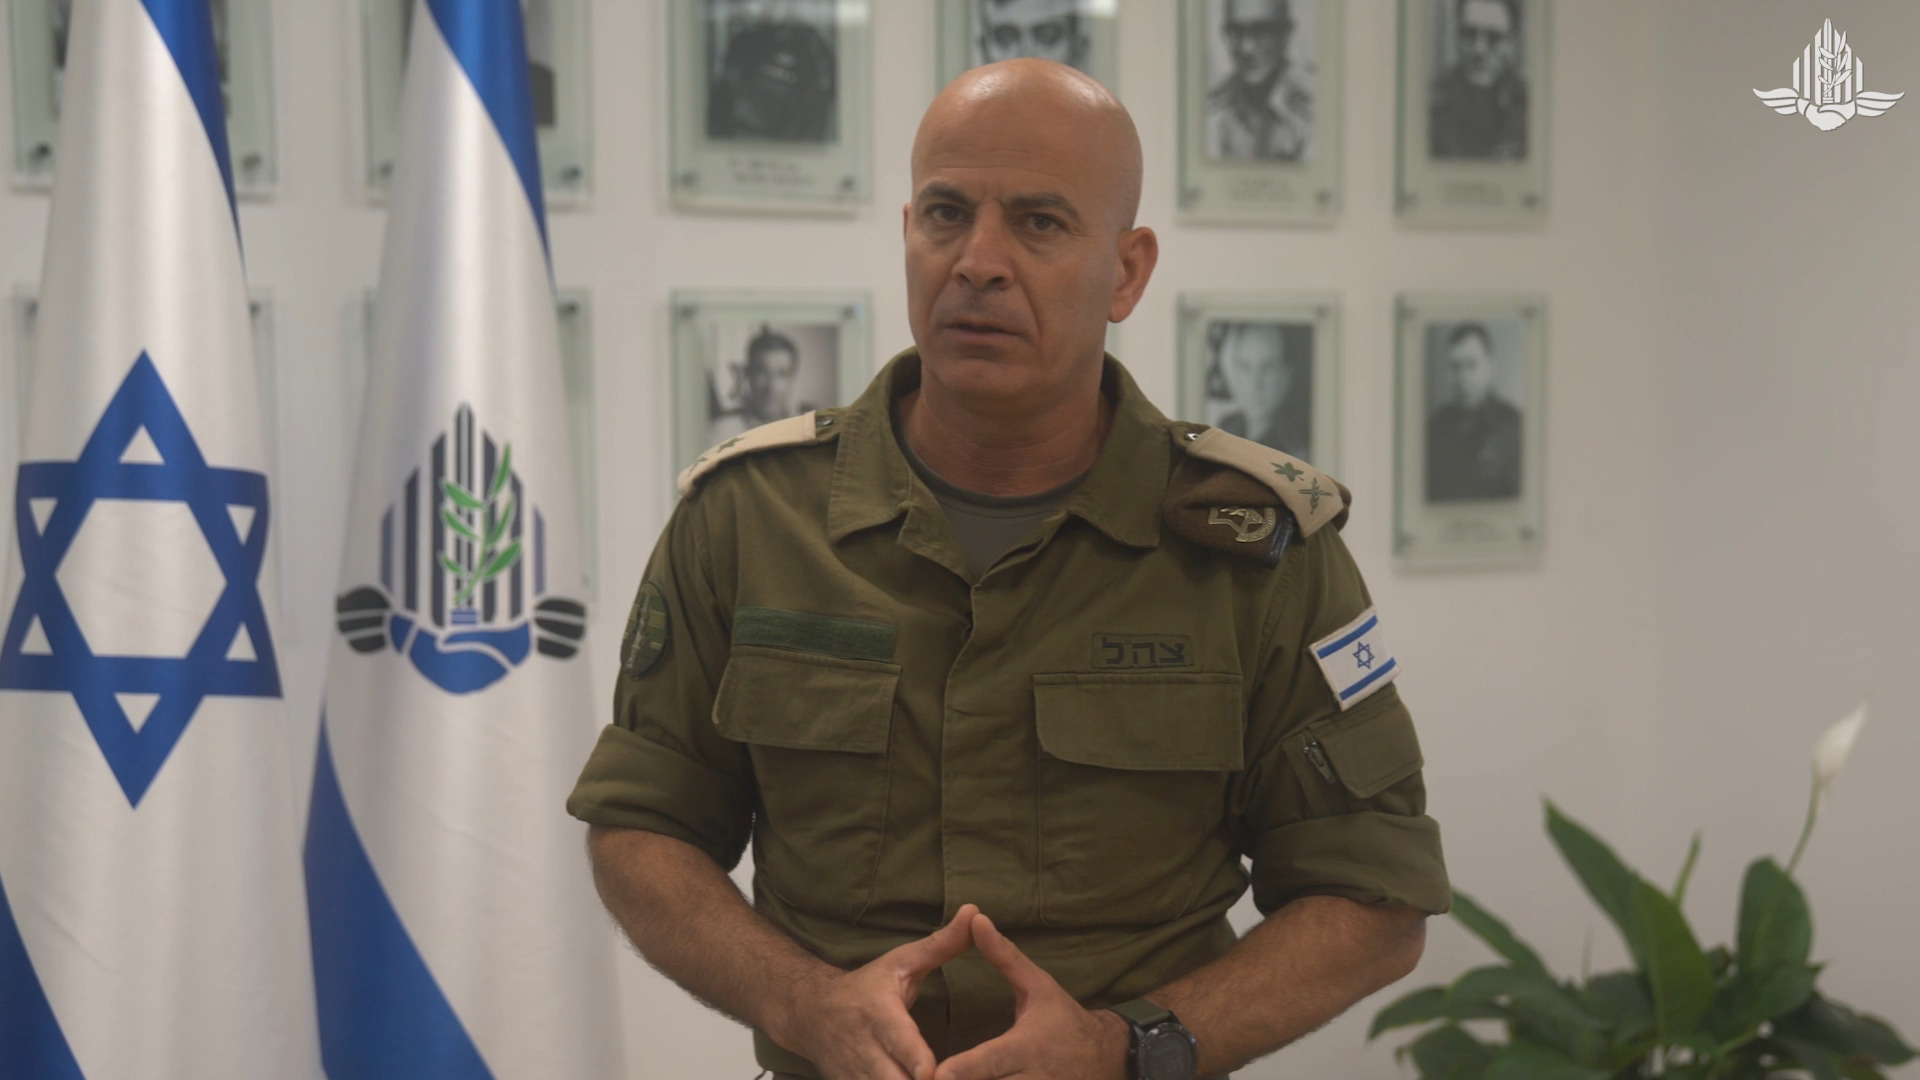 COGAT head Maj. Gen. Ghassan Alian in a video message to Gazans on August 5, 2022. (Screen capture/COGAT)